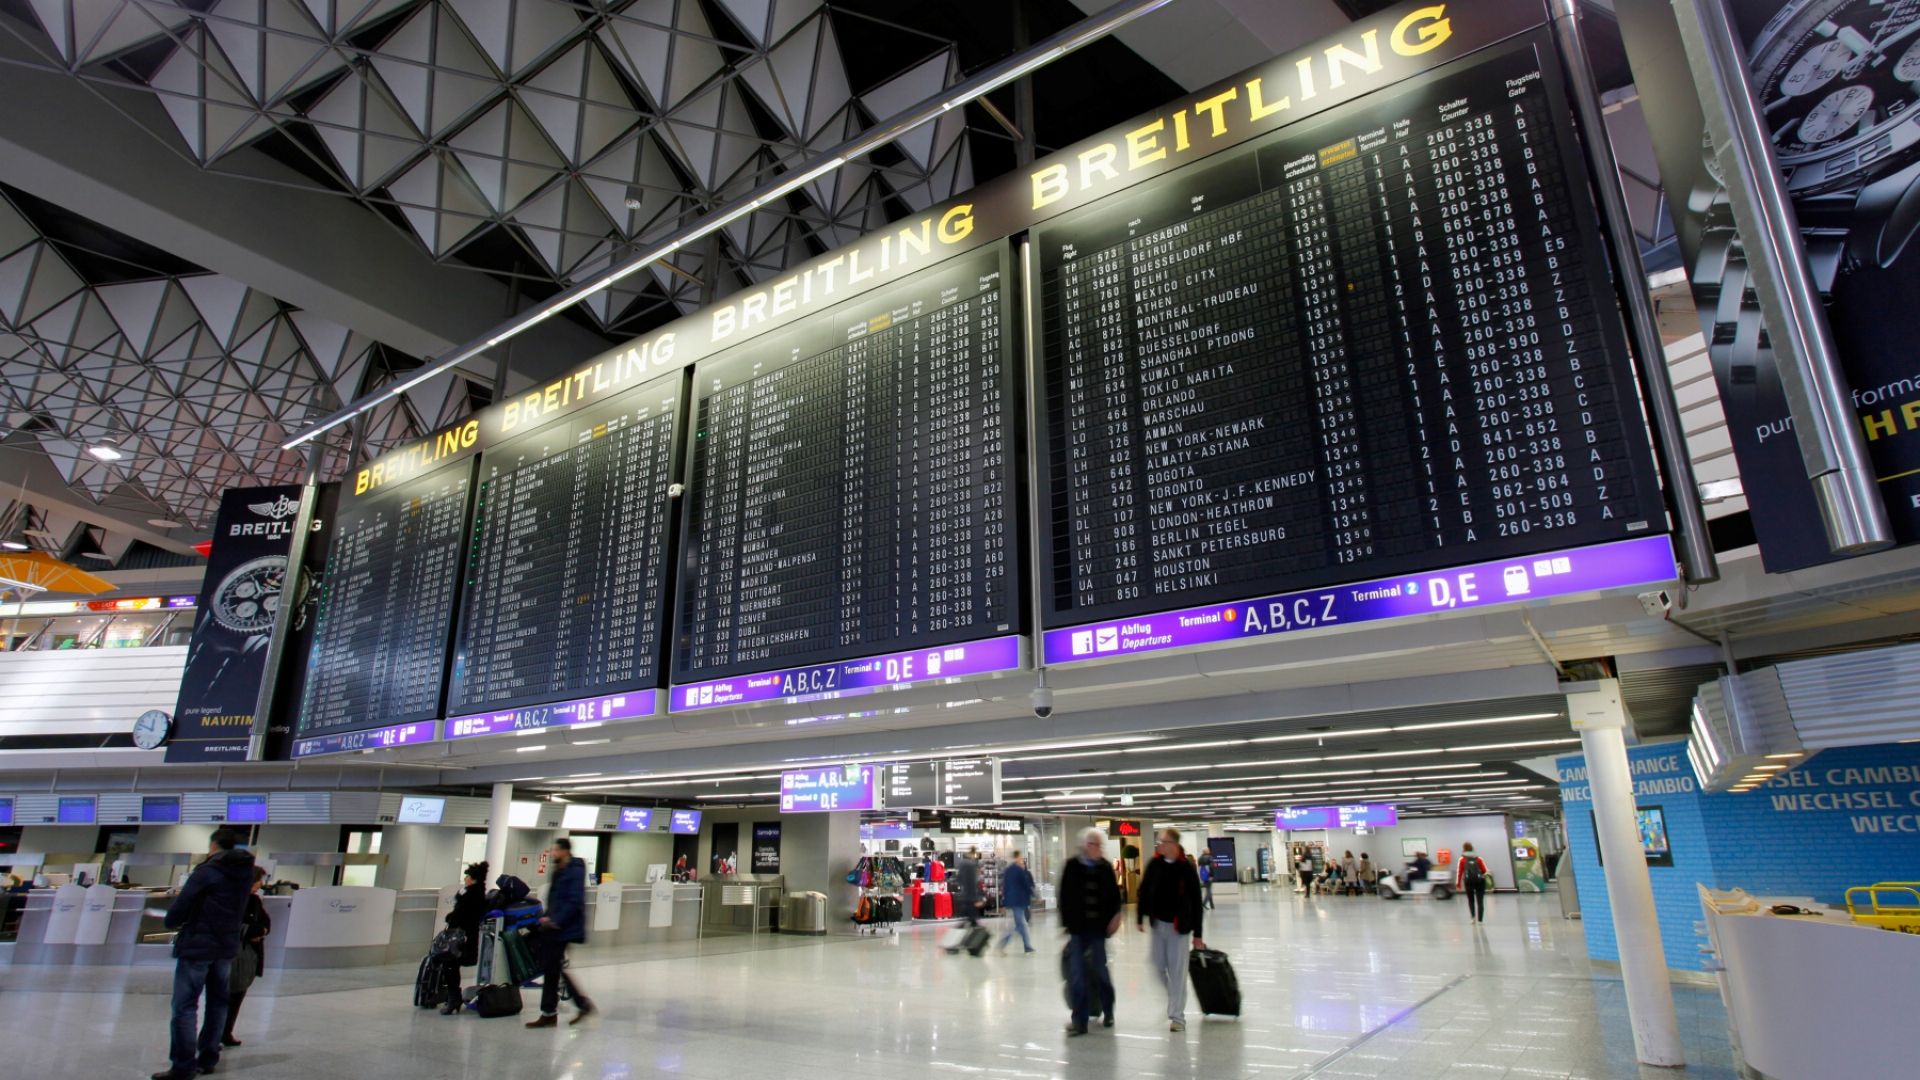 Frankfurt Airport arrivals and departures hall terminal interior